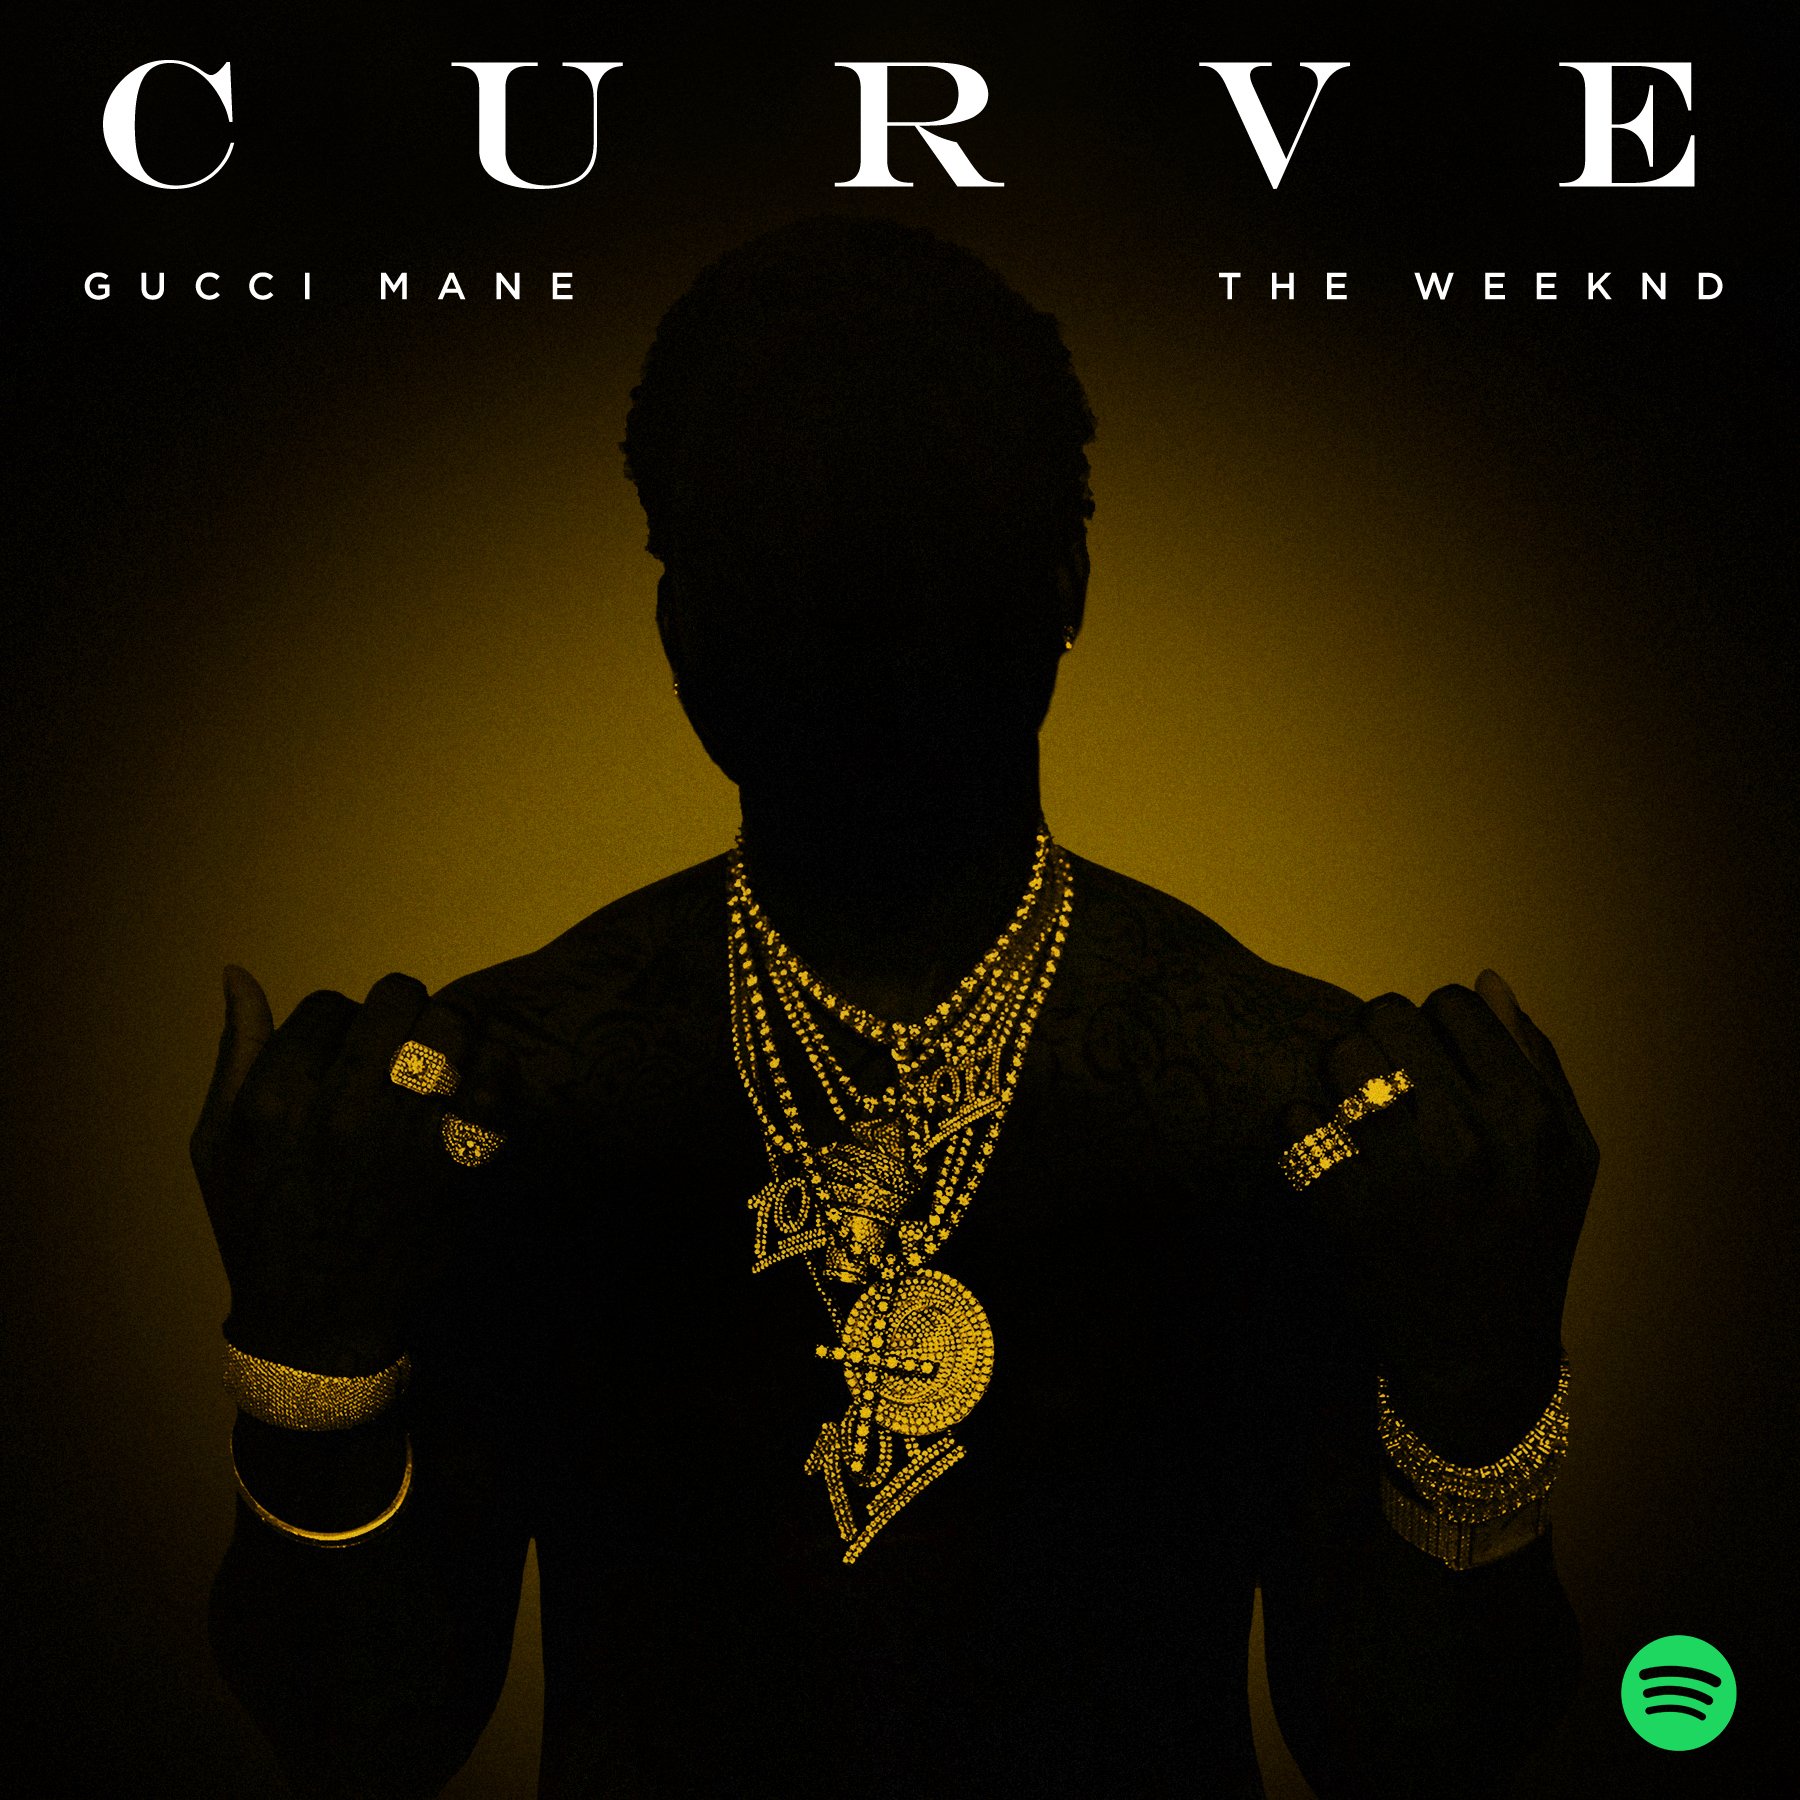 Gucci Mane on Twitter: "Mr. Davis coming soon!!! #Curve @theweeknd @Spotify  https://t.co/ePaHBv9NOK" / Twitter